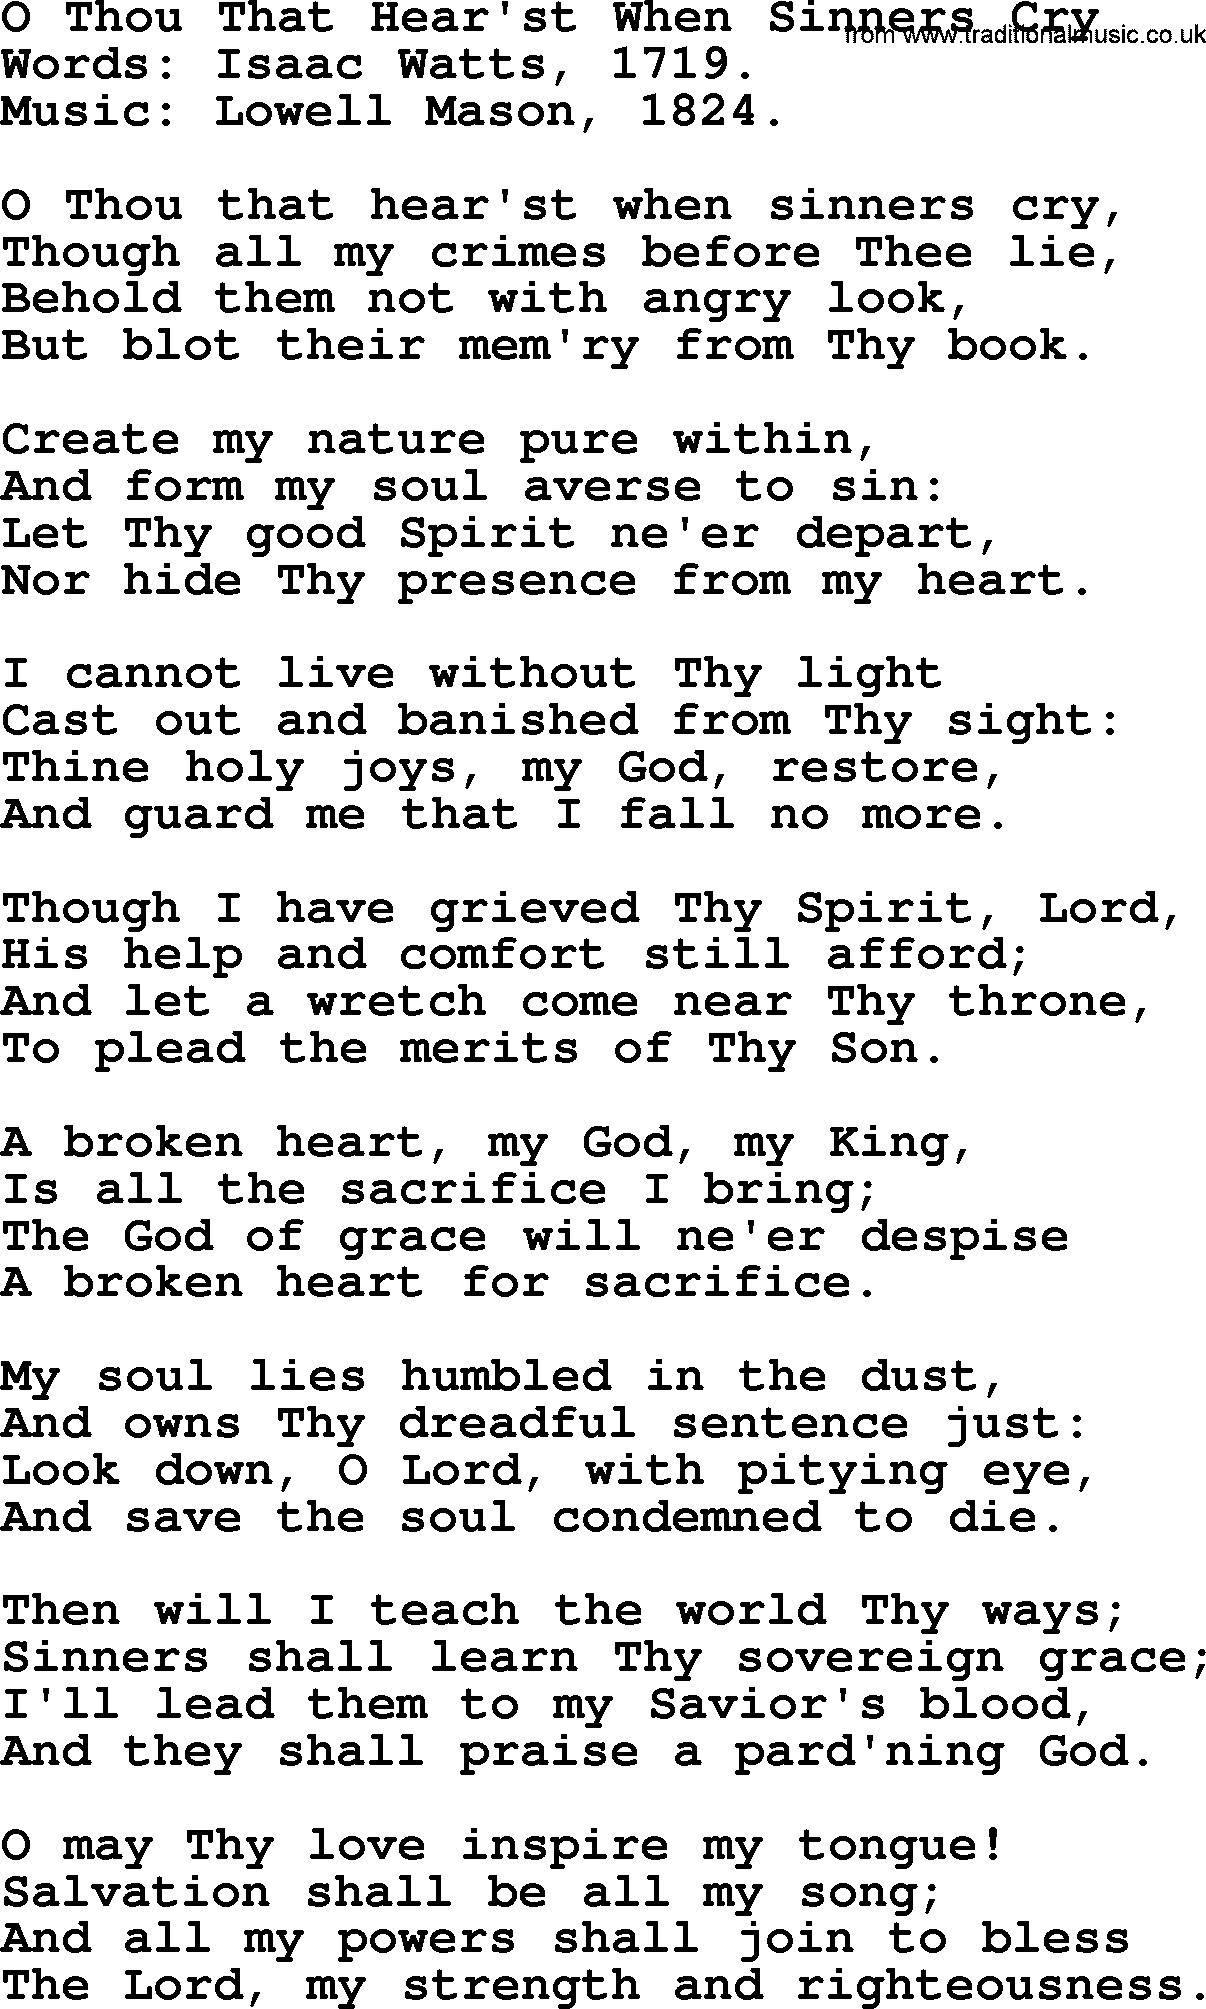 Isaac Watts Christian hymn: O Thou That Hear'st When Sinners Cry- lyricss